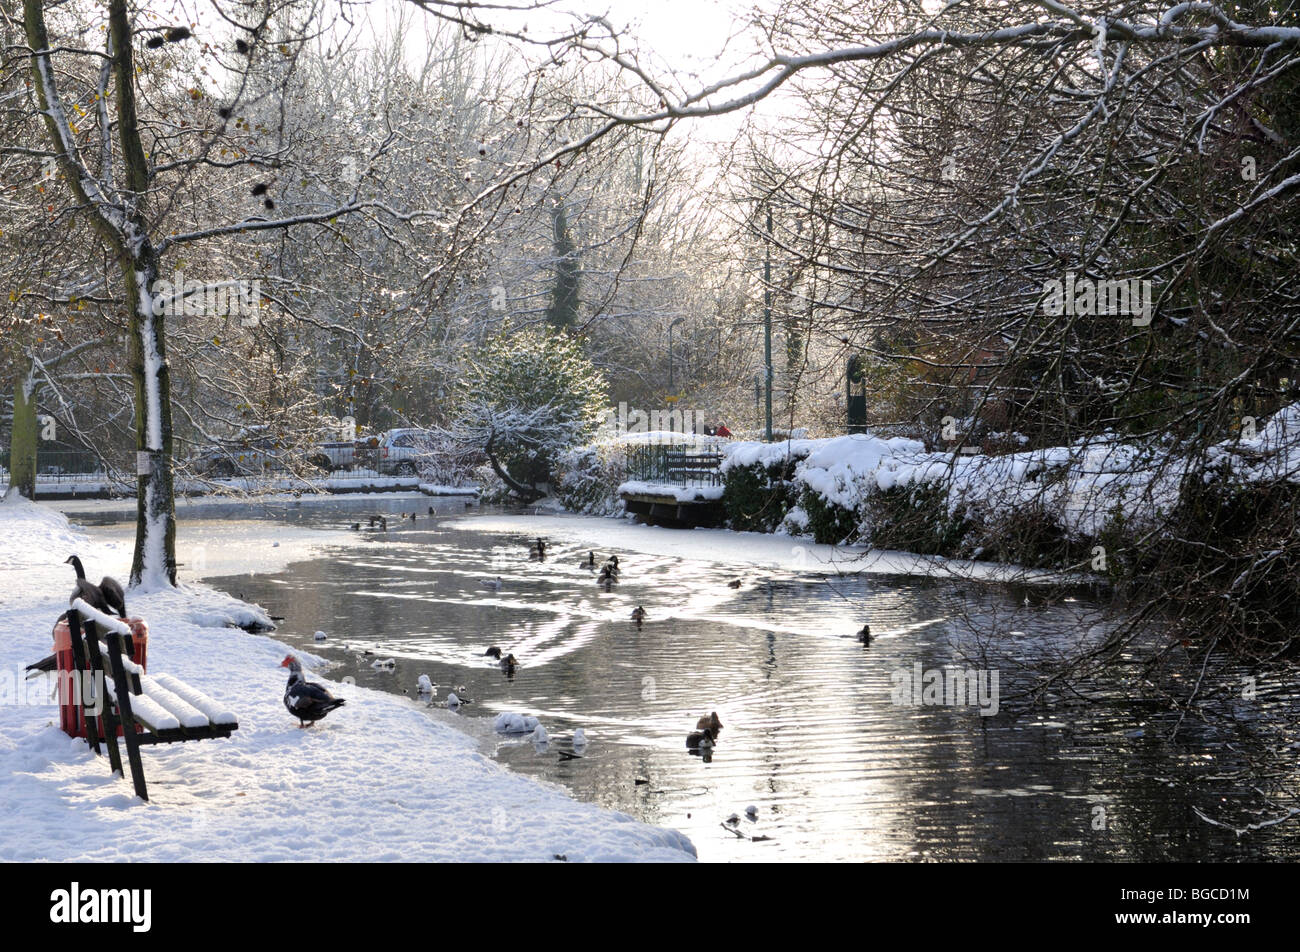 River Gade in winter, Hemel Hempstead, Hertfordshire, UK. Stock Photo